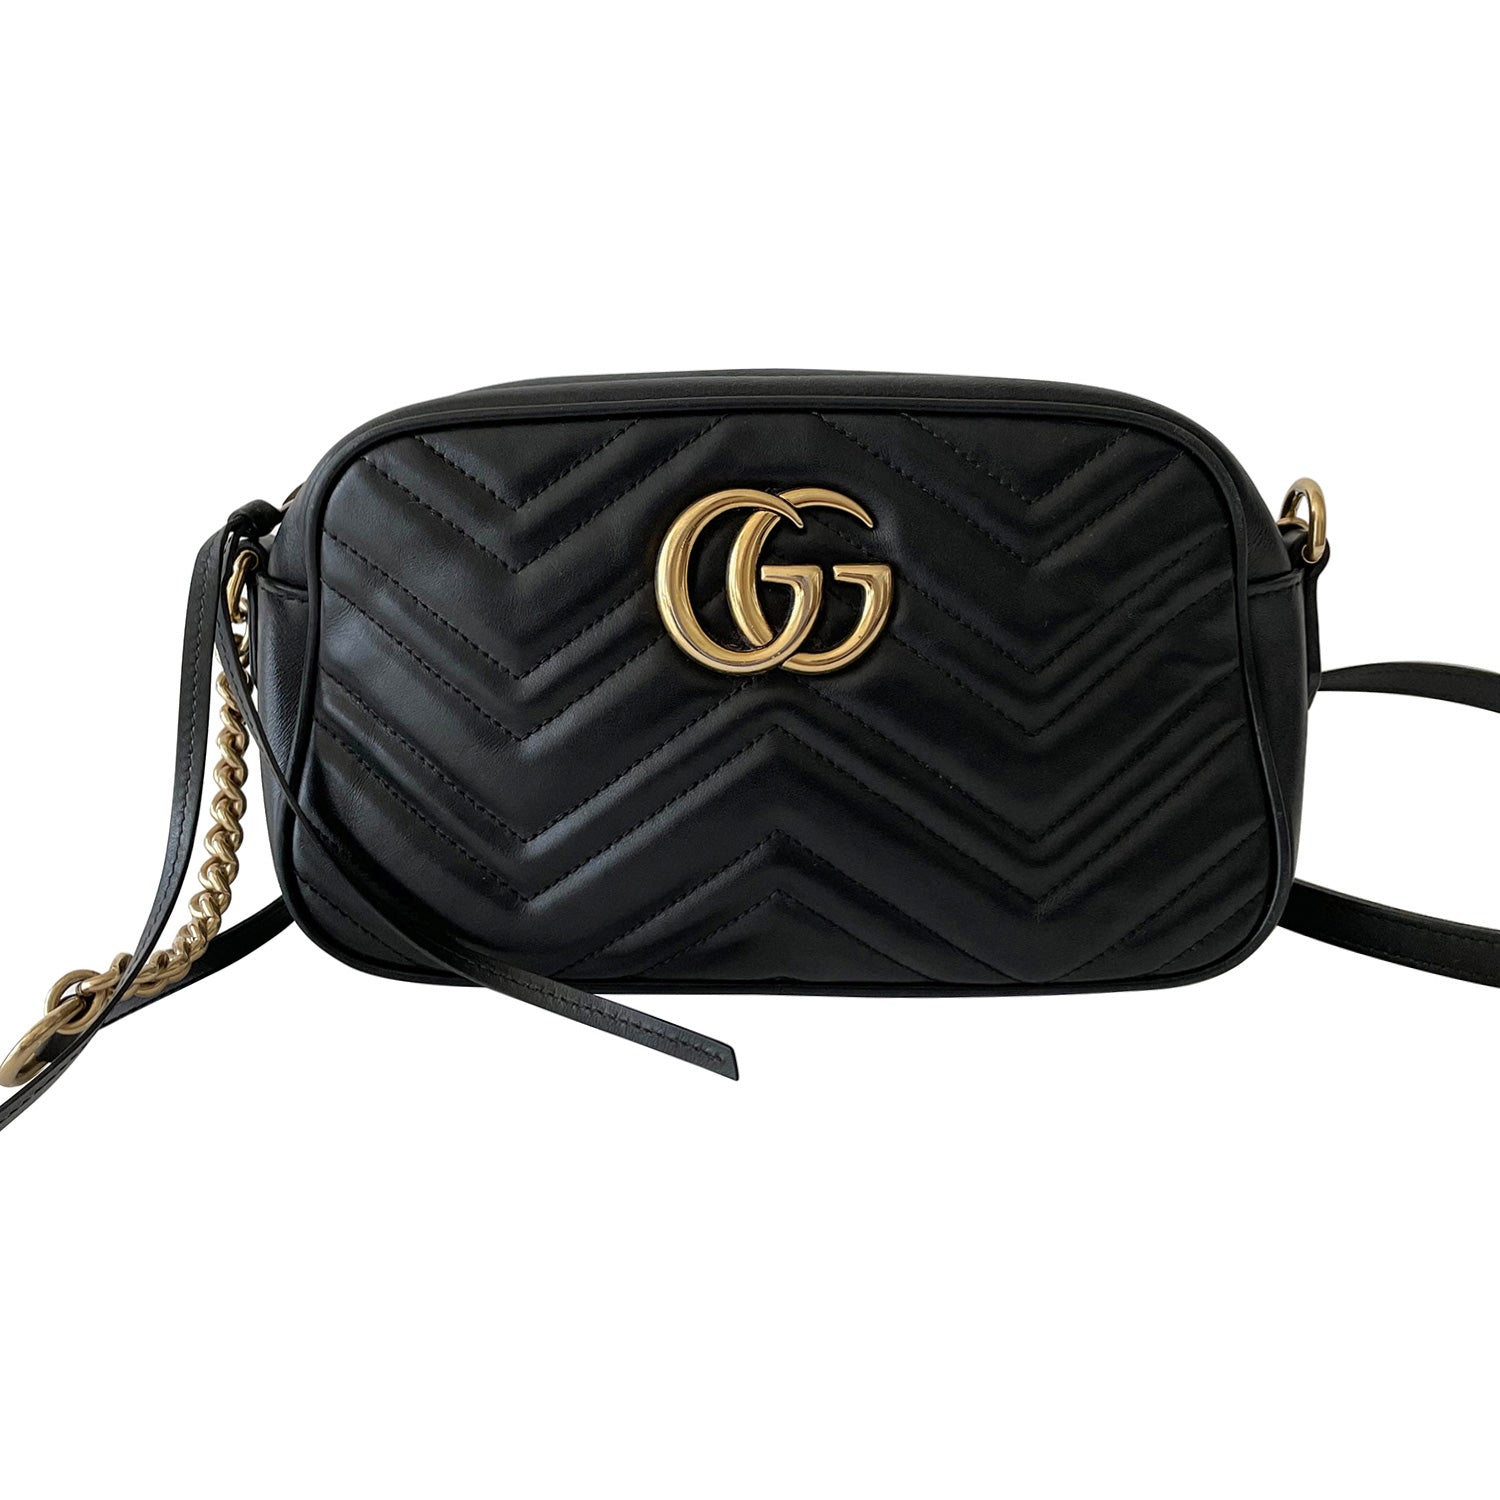 Gucci GG Black Marmont Small Shoulder Bag (RRP £1340)